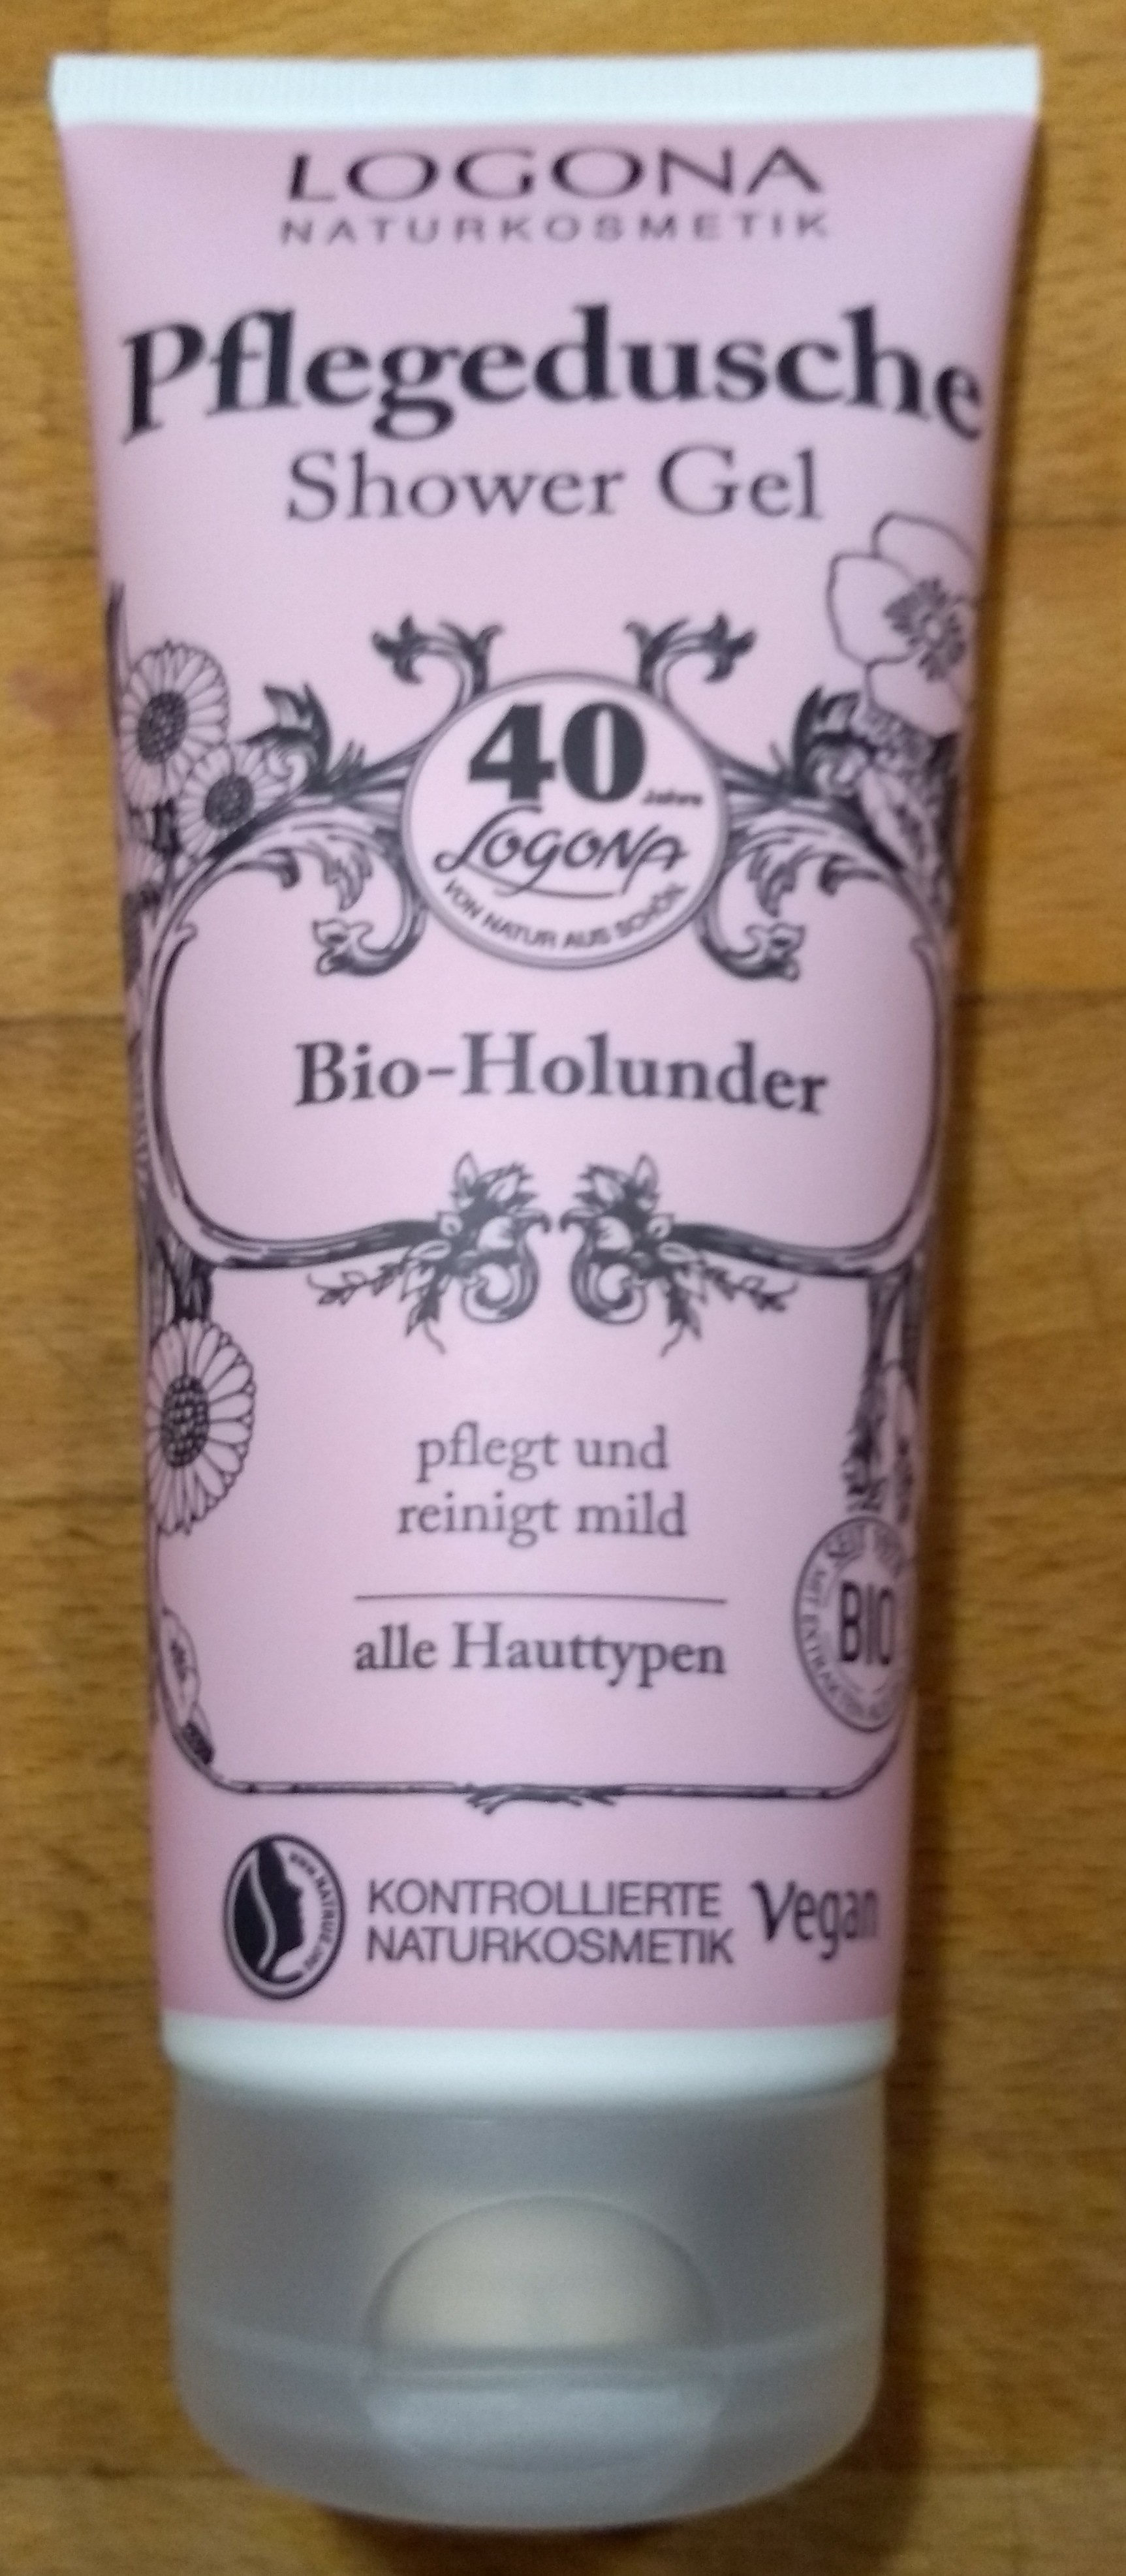 Pflegedusche Bio-Holunder - Product - de